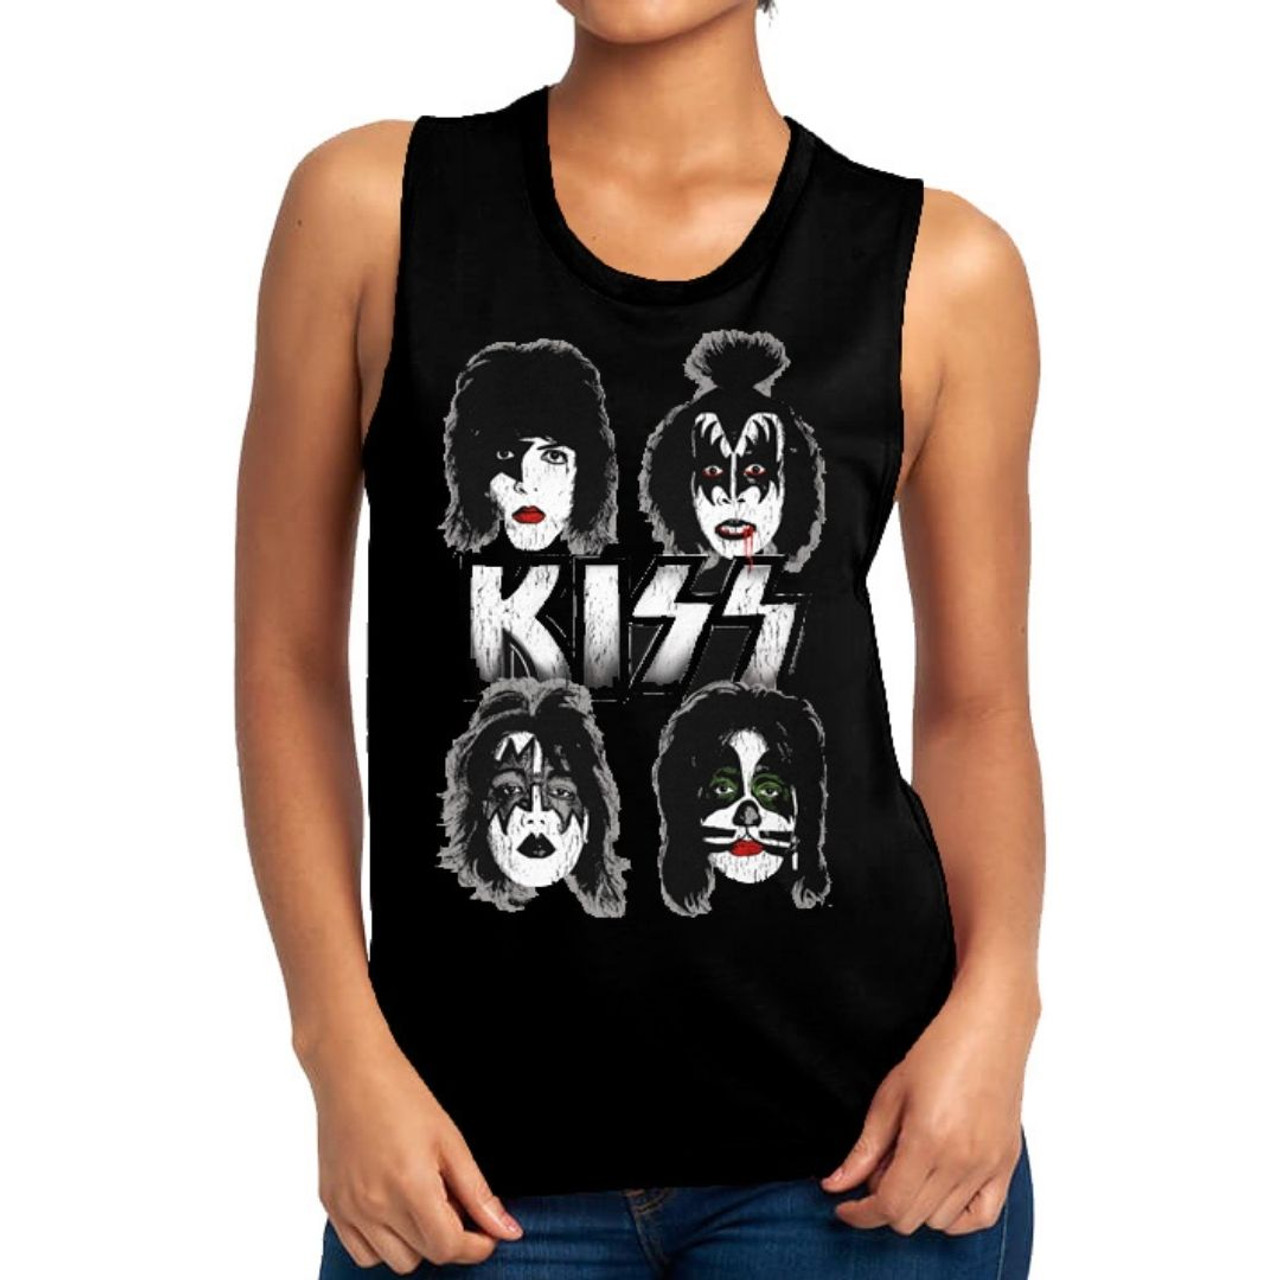 Kiss Women's Vintage Fashion Sleeveless T-Shirt - Band Member Images. Black Muscle Tank Top Shirt